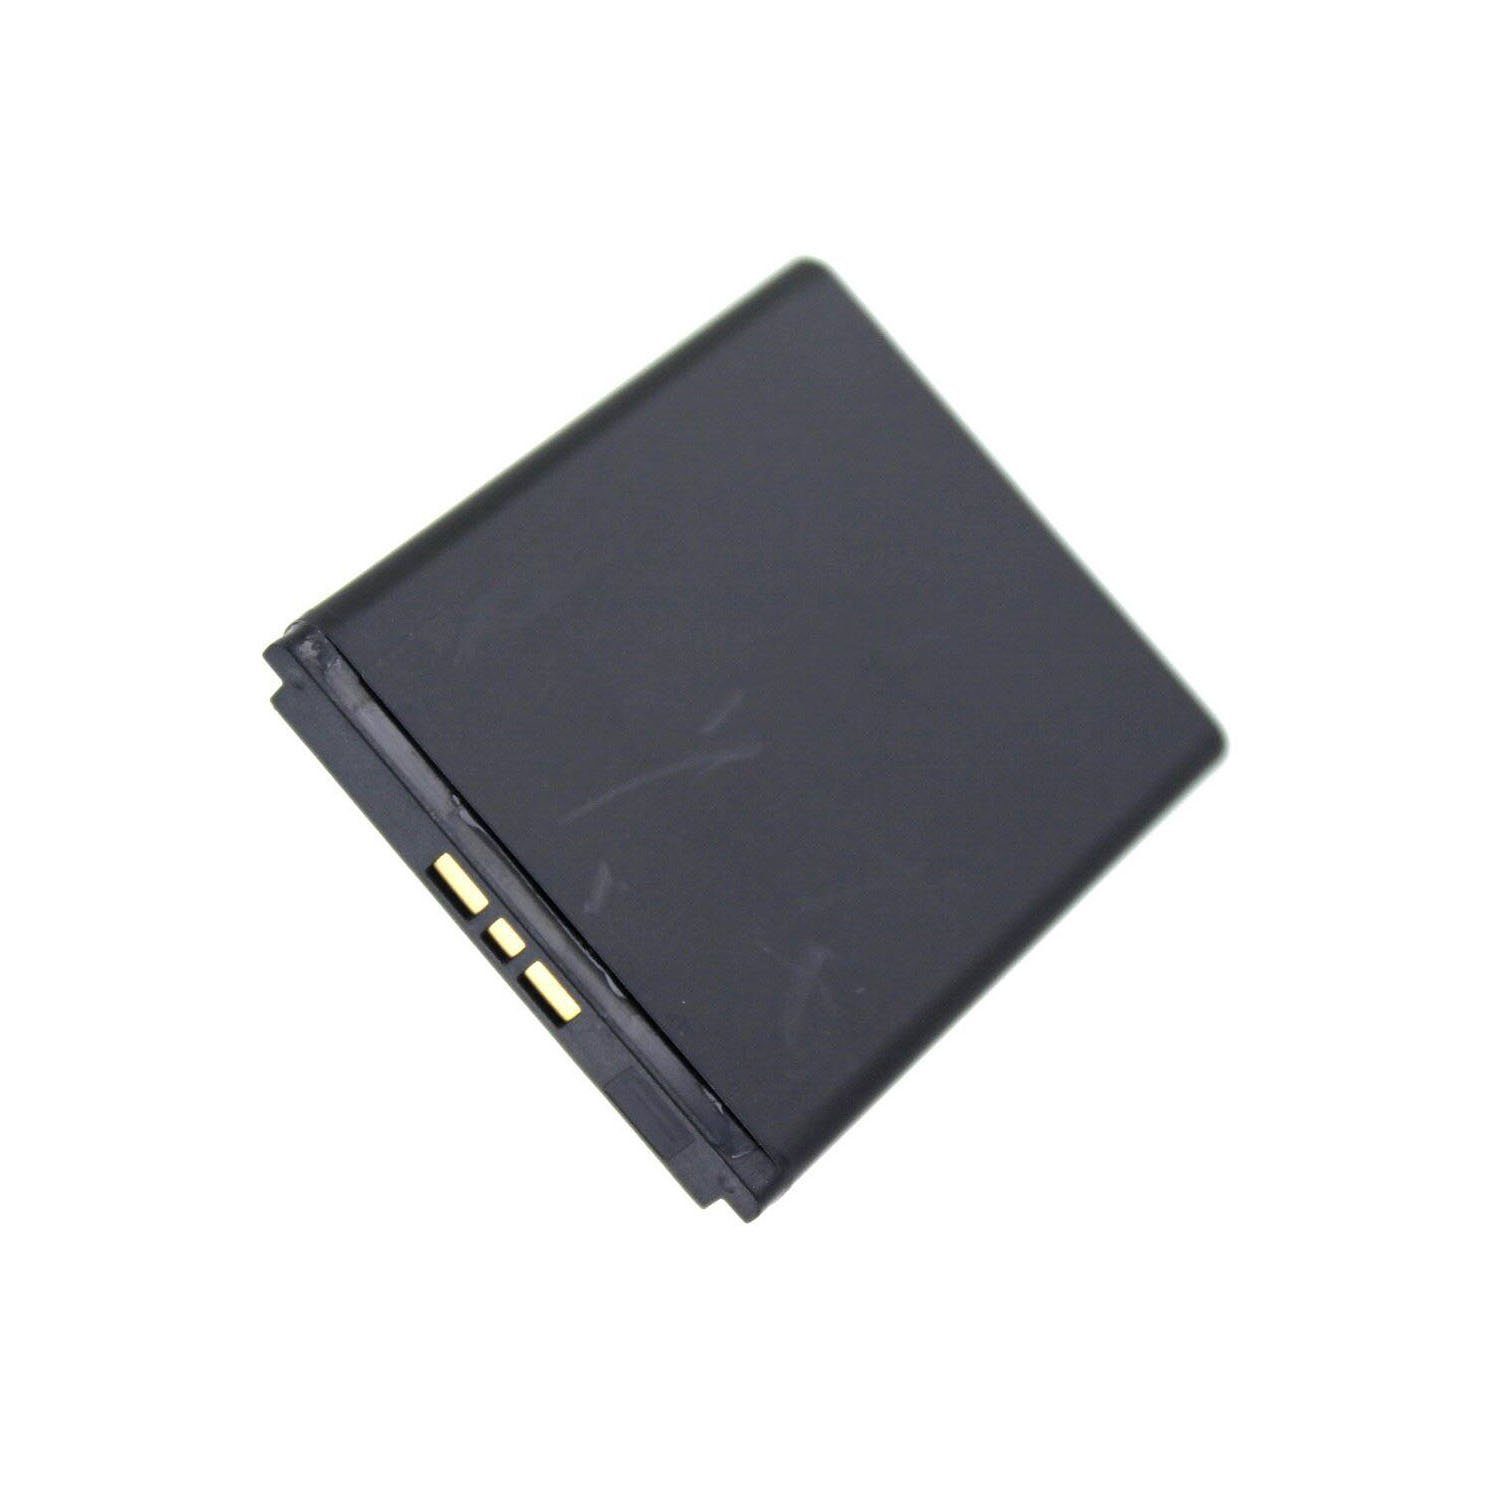 AGI Akku kompatibel mit Sony Ericsson W880I Akku Akku